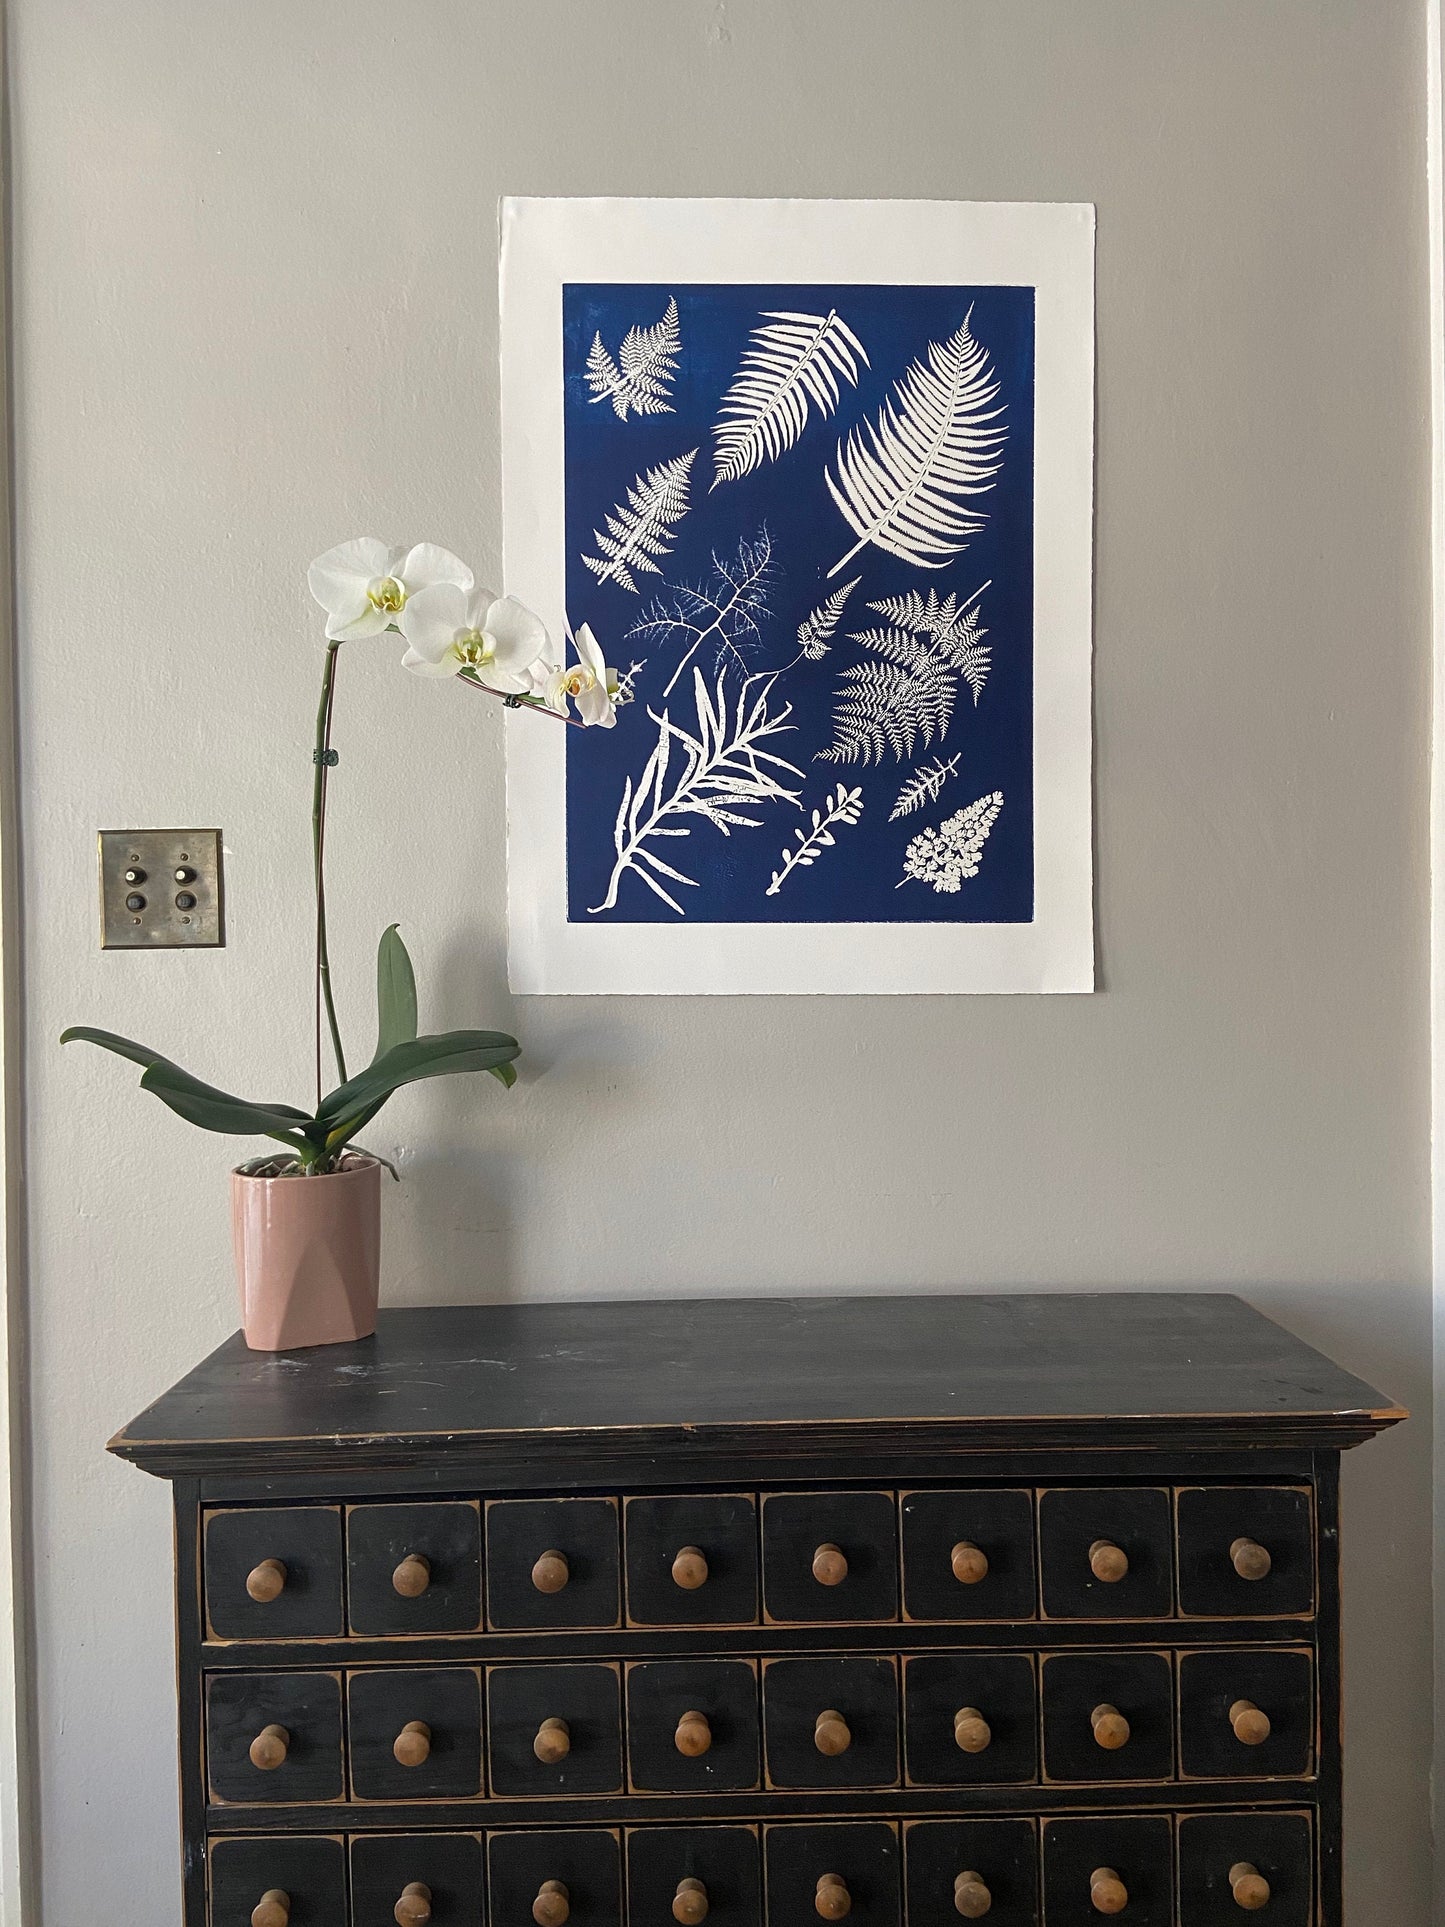 Ferns Collage Hand Pressed Botanical Monoprint on Blue - 18x24 giclee print